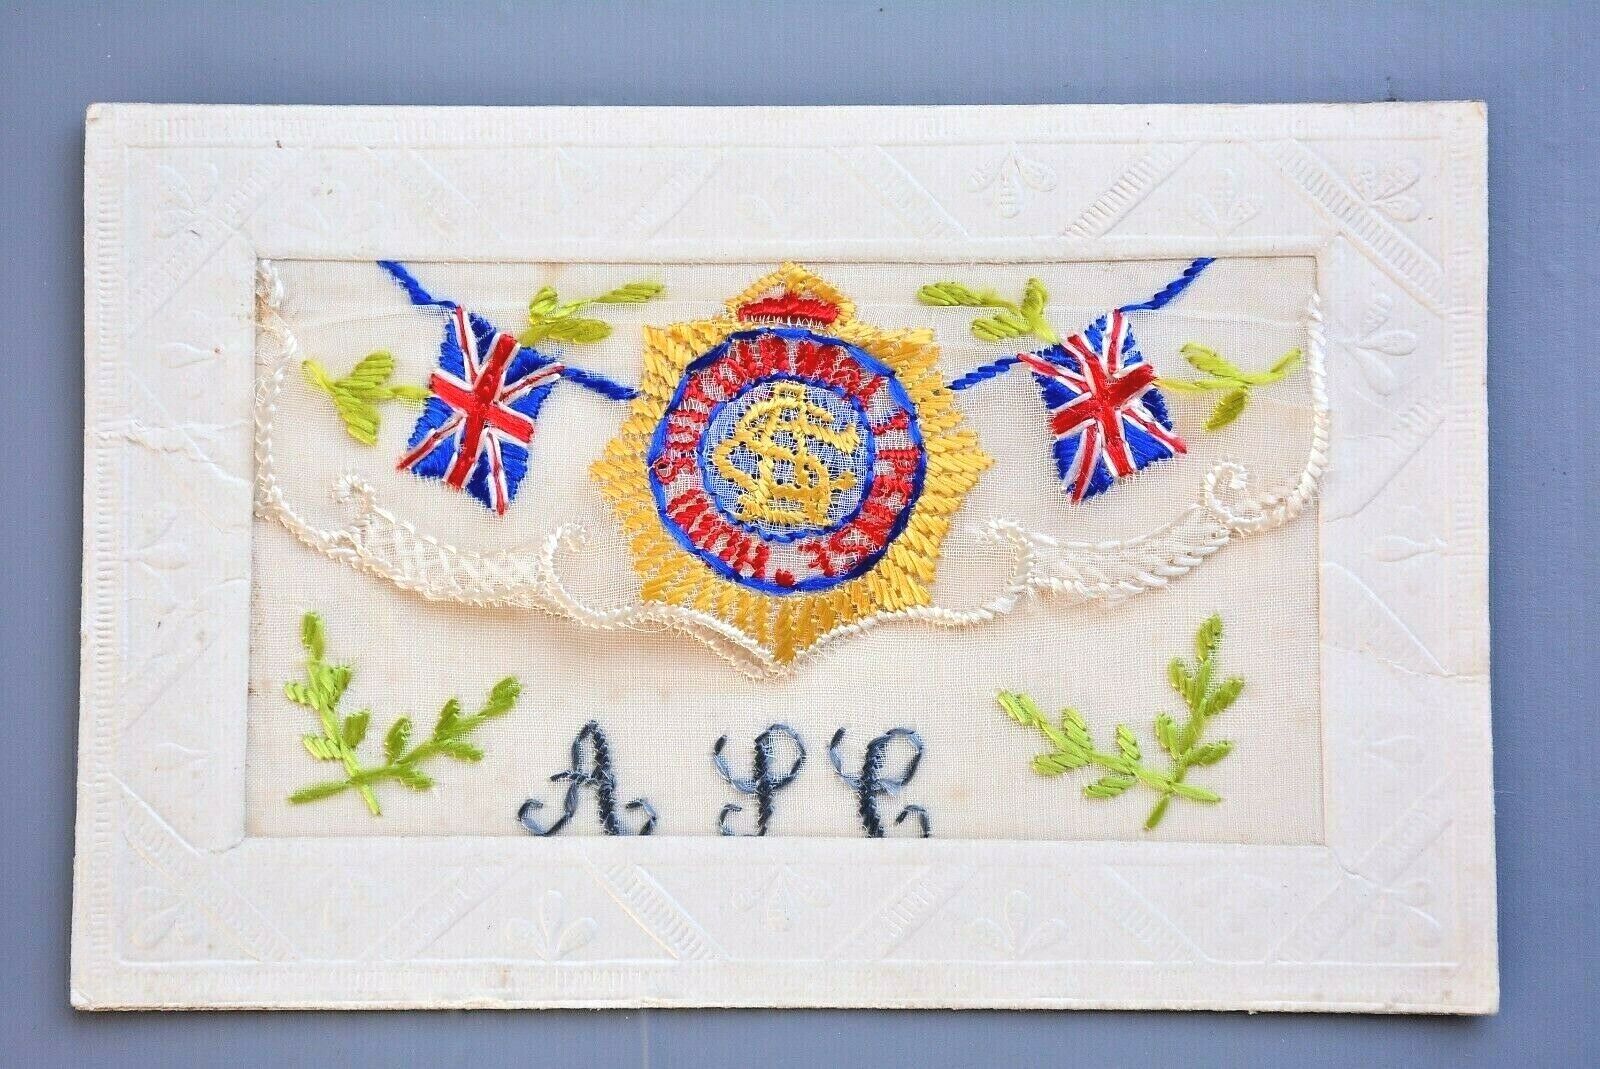 R&L Postcard: WW1 Silk, ASC Army Service Corps Crest, Patriotic Union Jack Flags